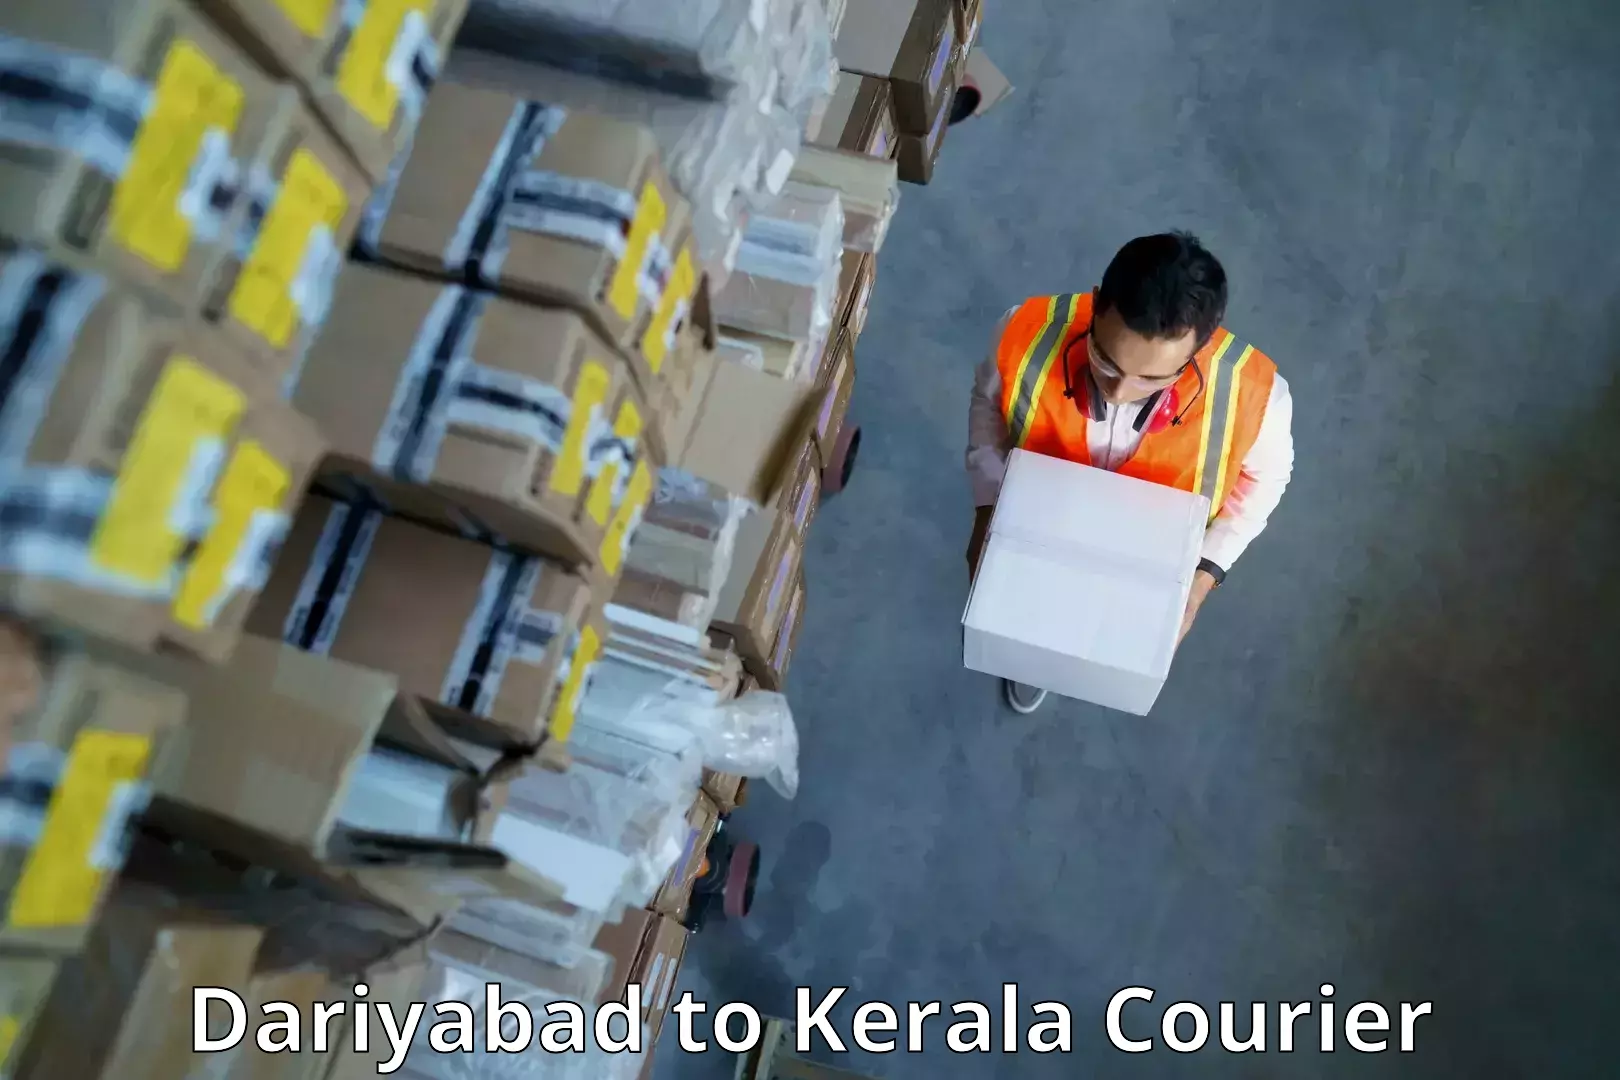 On-demand delivery Dariyabad to Kottayam